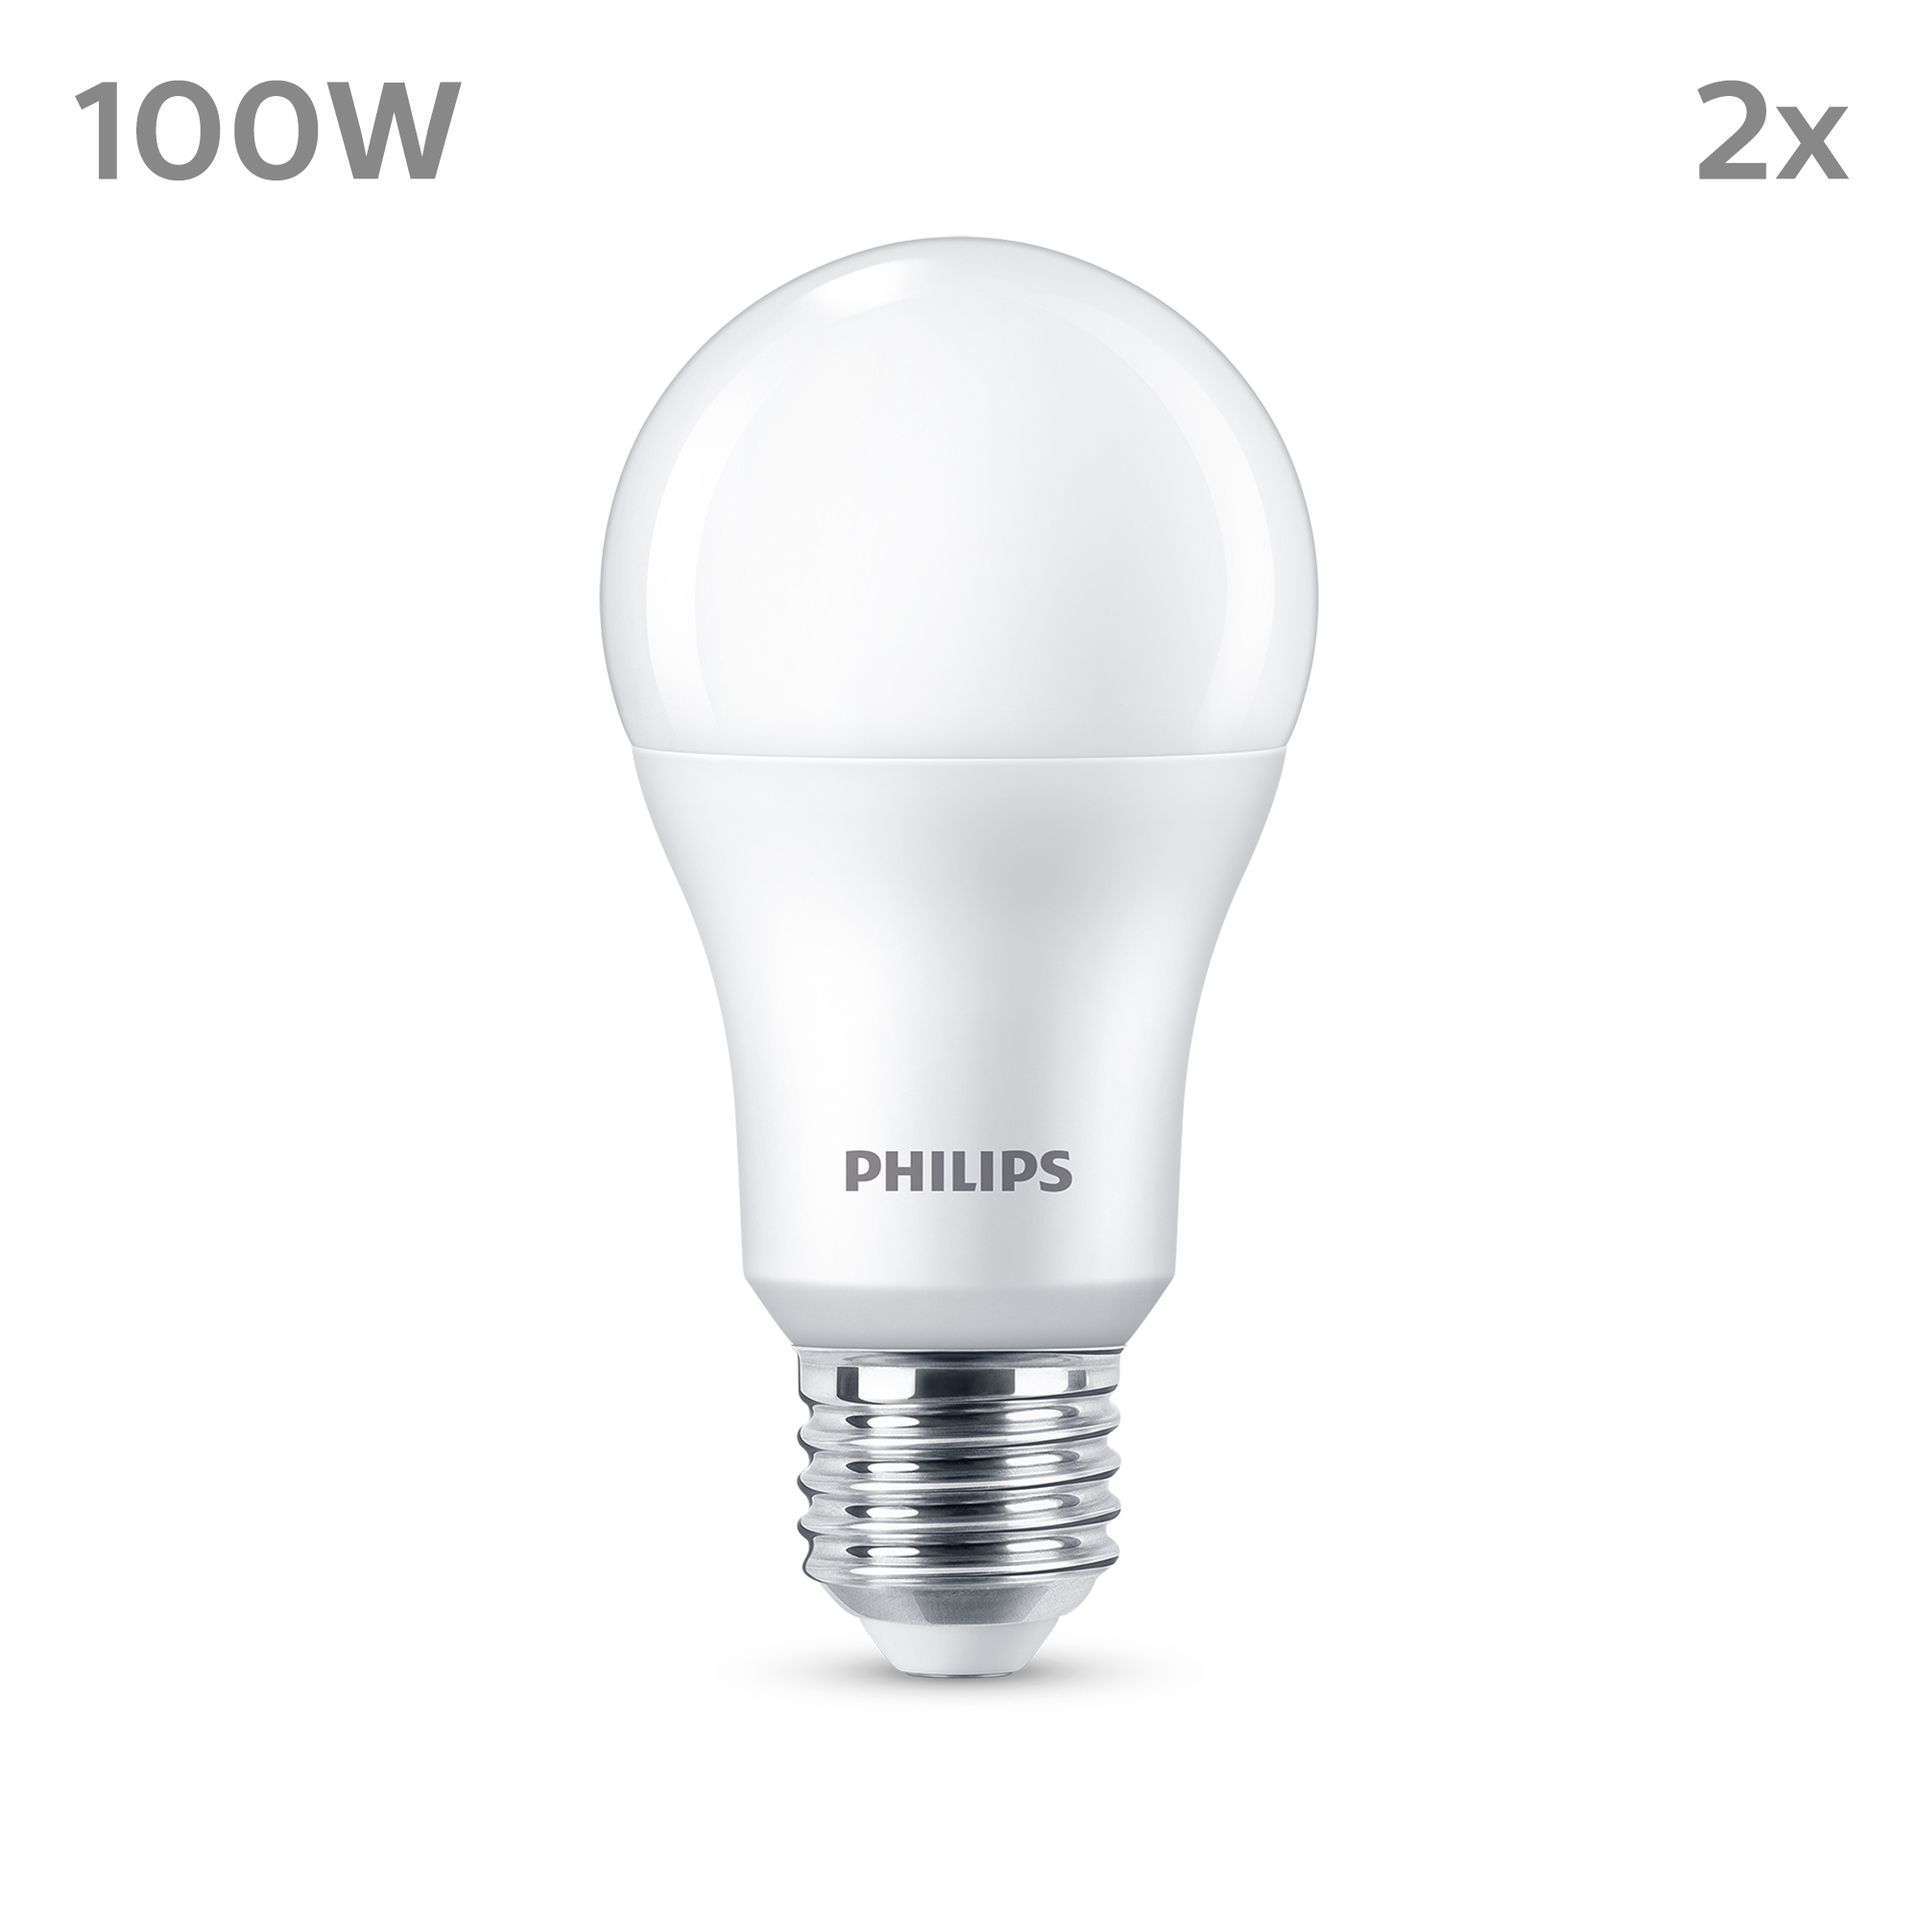 Pachet dublu de becuri cu LED Philips 13-100W E27 840 mat 1521lm 4000K